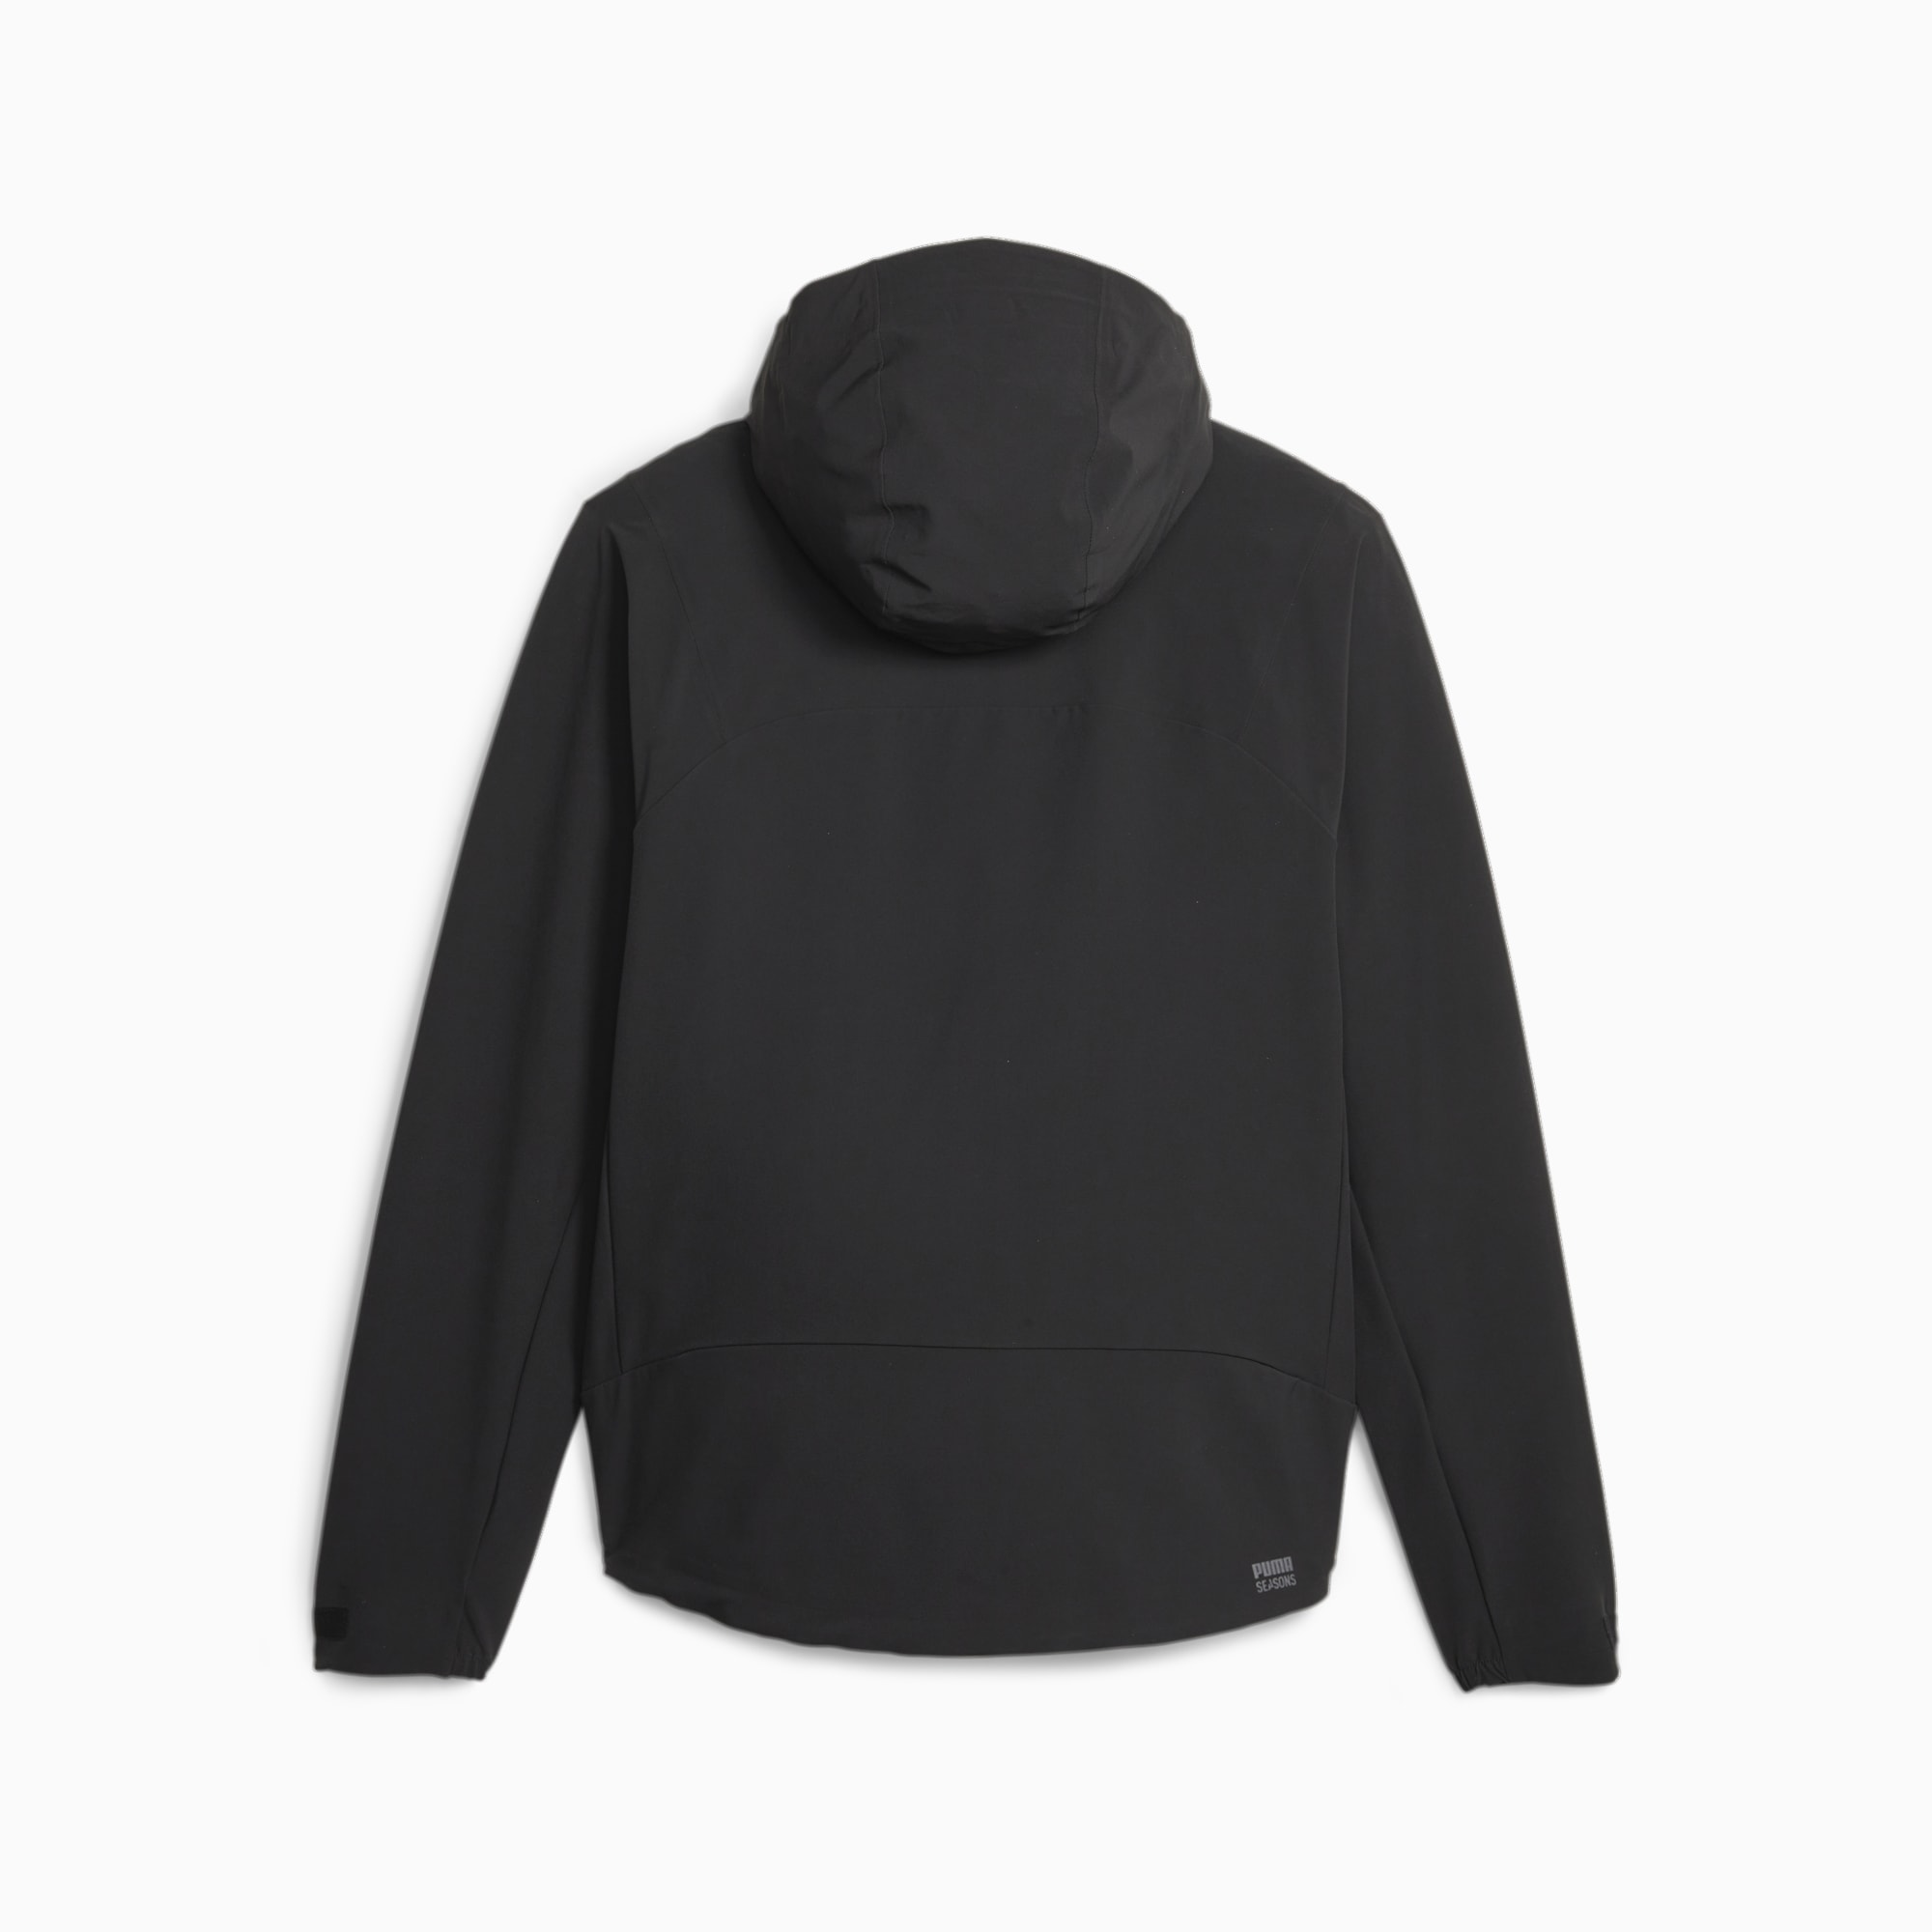 PUMA Seasons Men's Softshell Running Jacket, Black, Size XS, Clothing